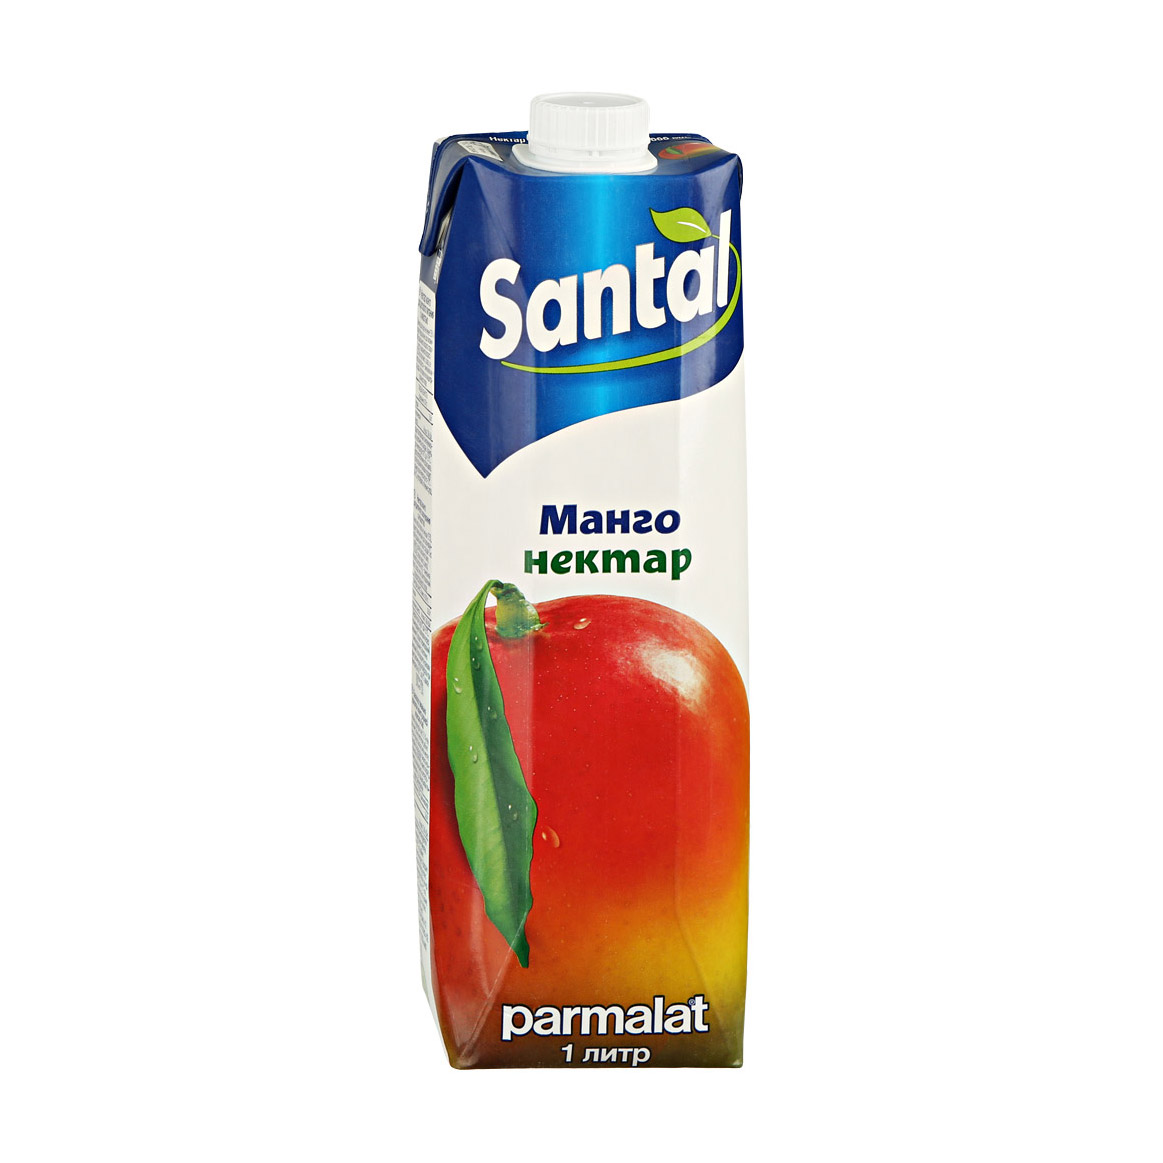 Нектар Santal Манго 1 л нектар santal грушевый с мякотью 1 л